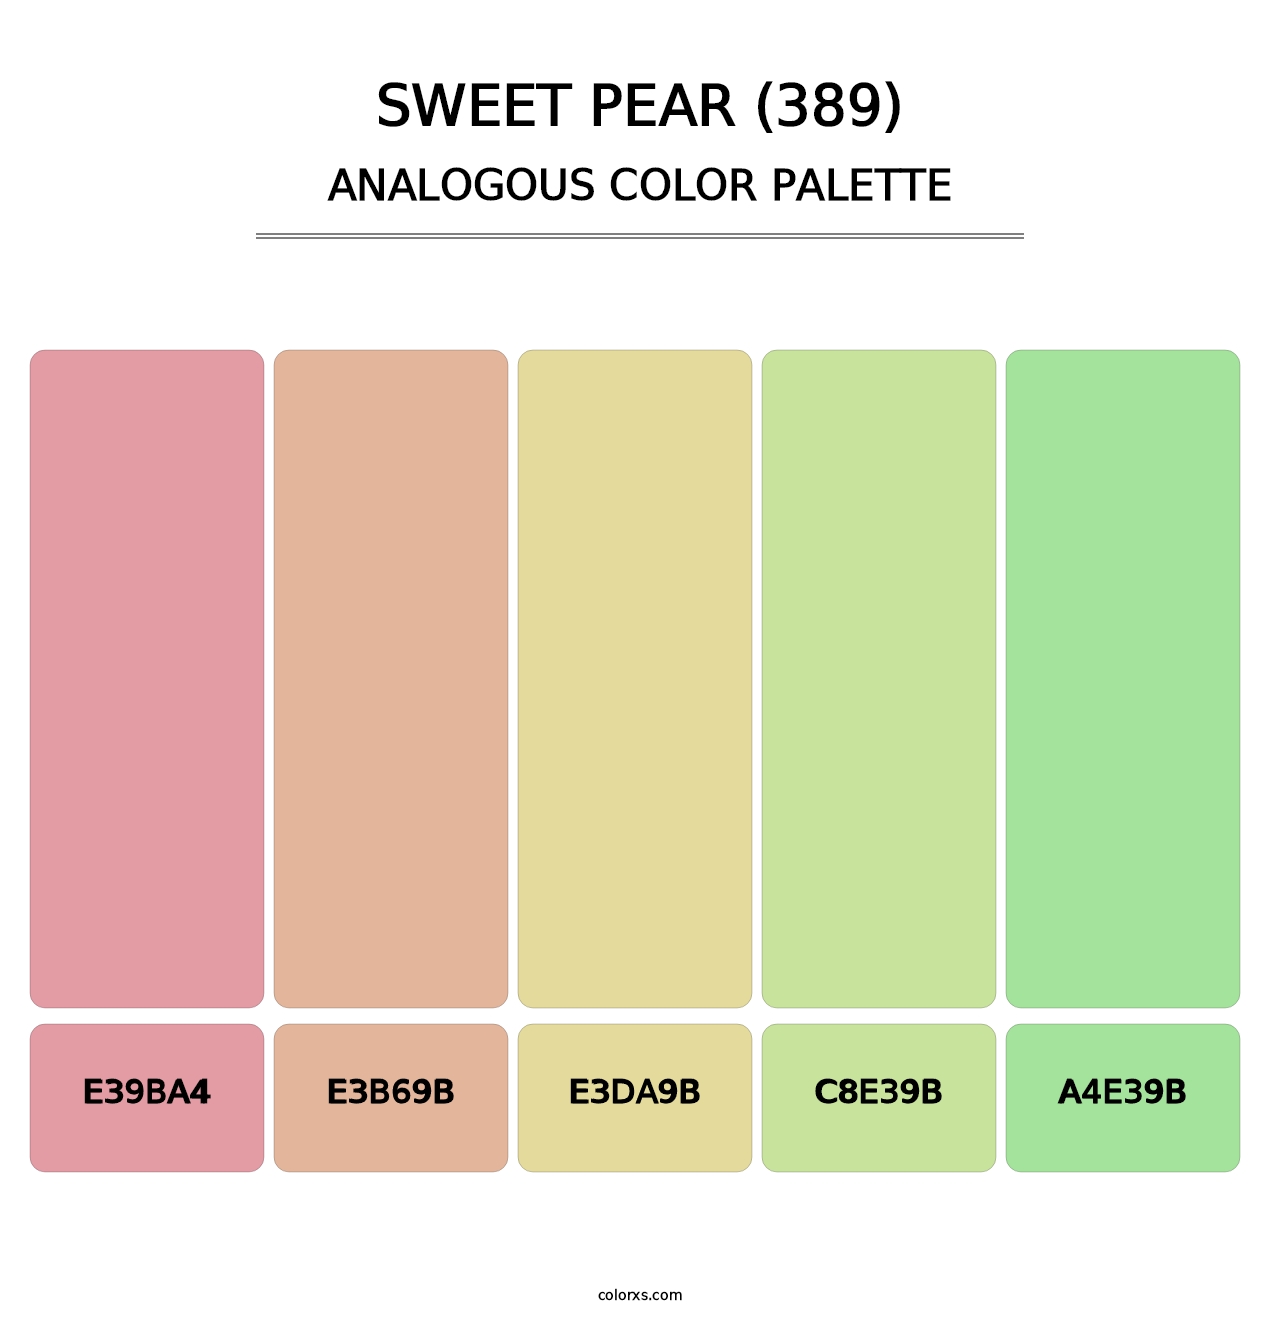 Sweet Pear (389) - Analogous Color Palette